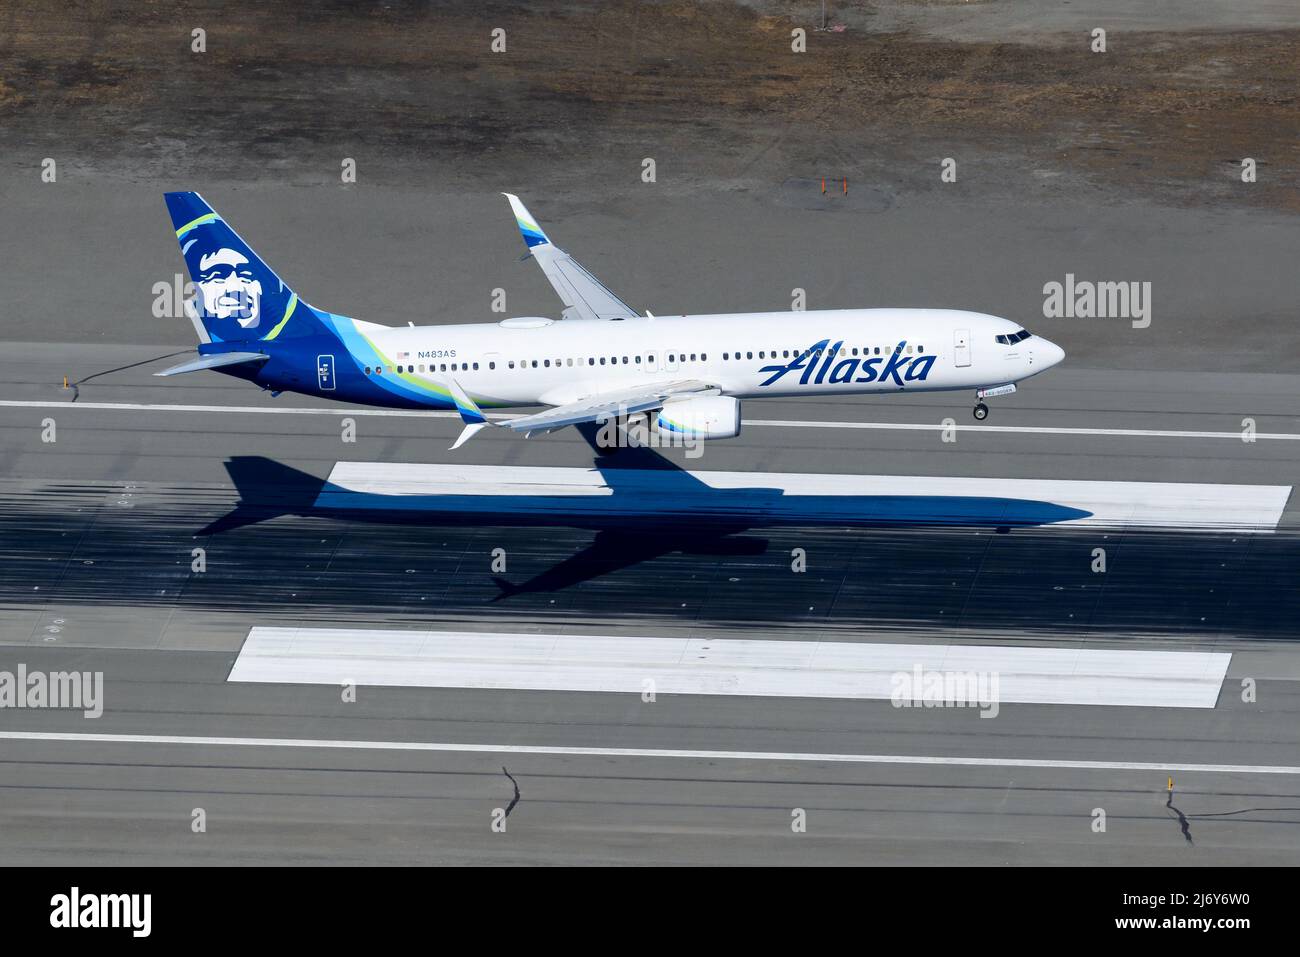 Alaska Airlines Boeing 737-Flugzeuge landen in Anchorage, Alaska. Flugzeug N483AS kommt von oben gesehen an. Alaska Airlines 737-900 Flugzeug. Stockfoto